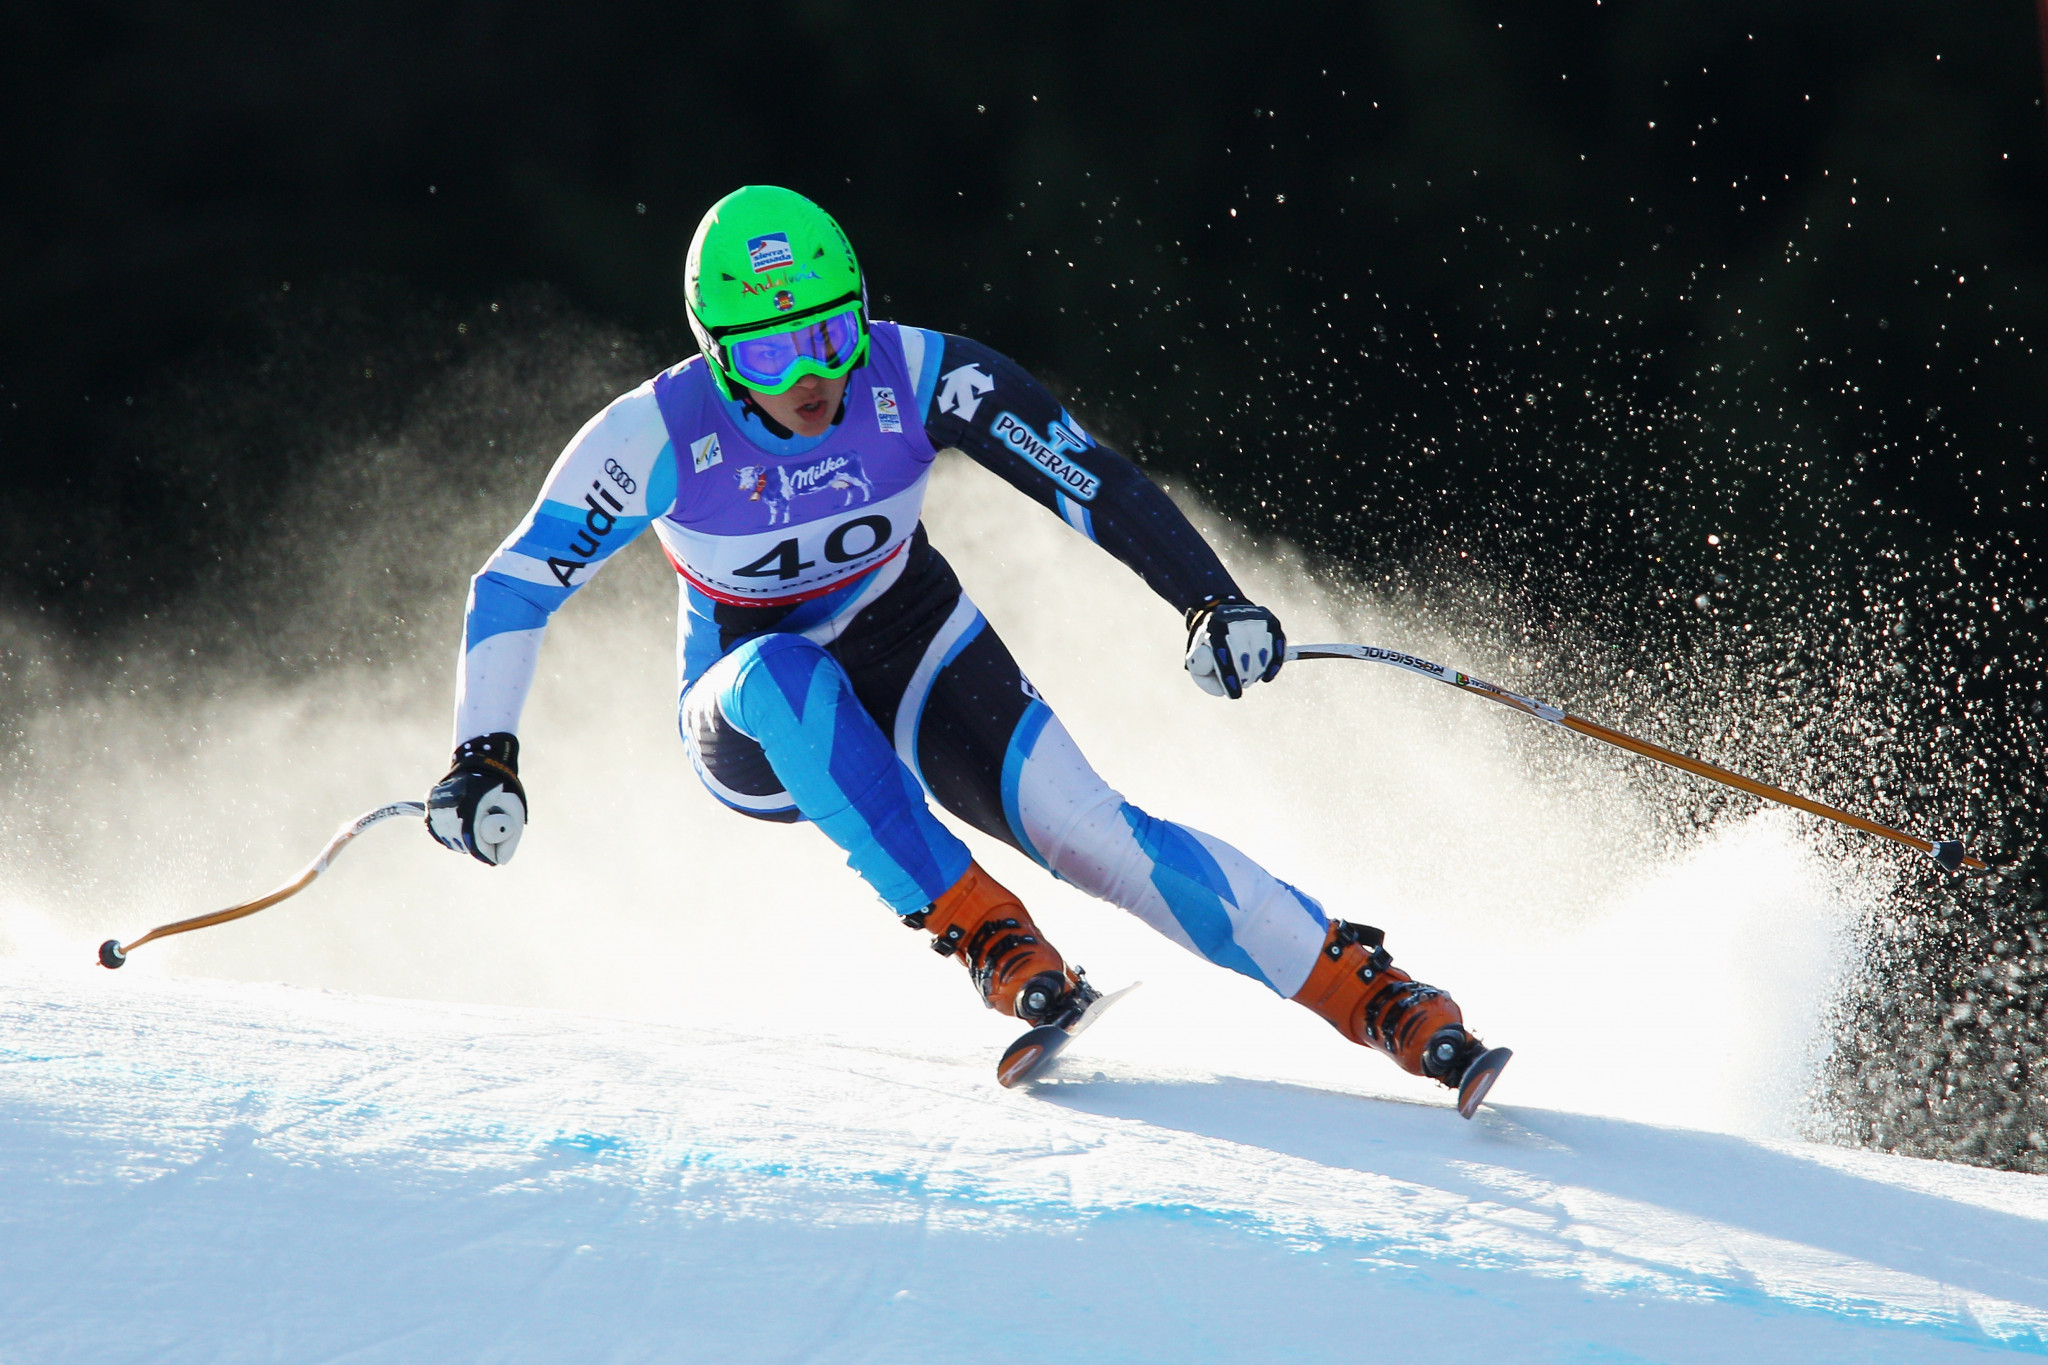 María José Rienda has taken a new role at the Sierra Nevada ski resort ©Getty Images